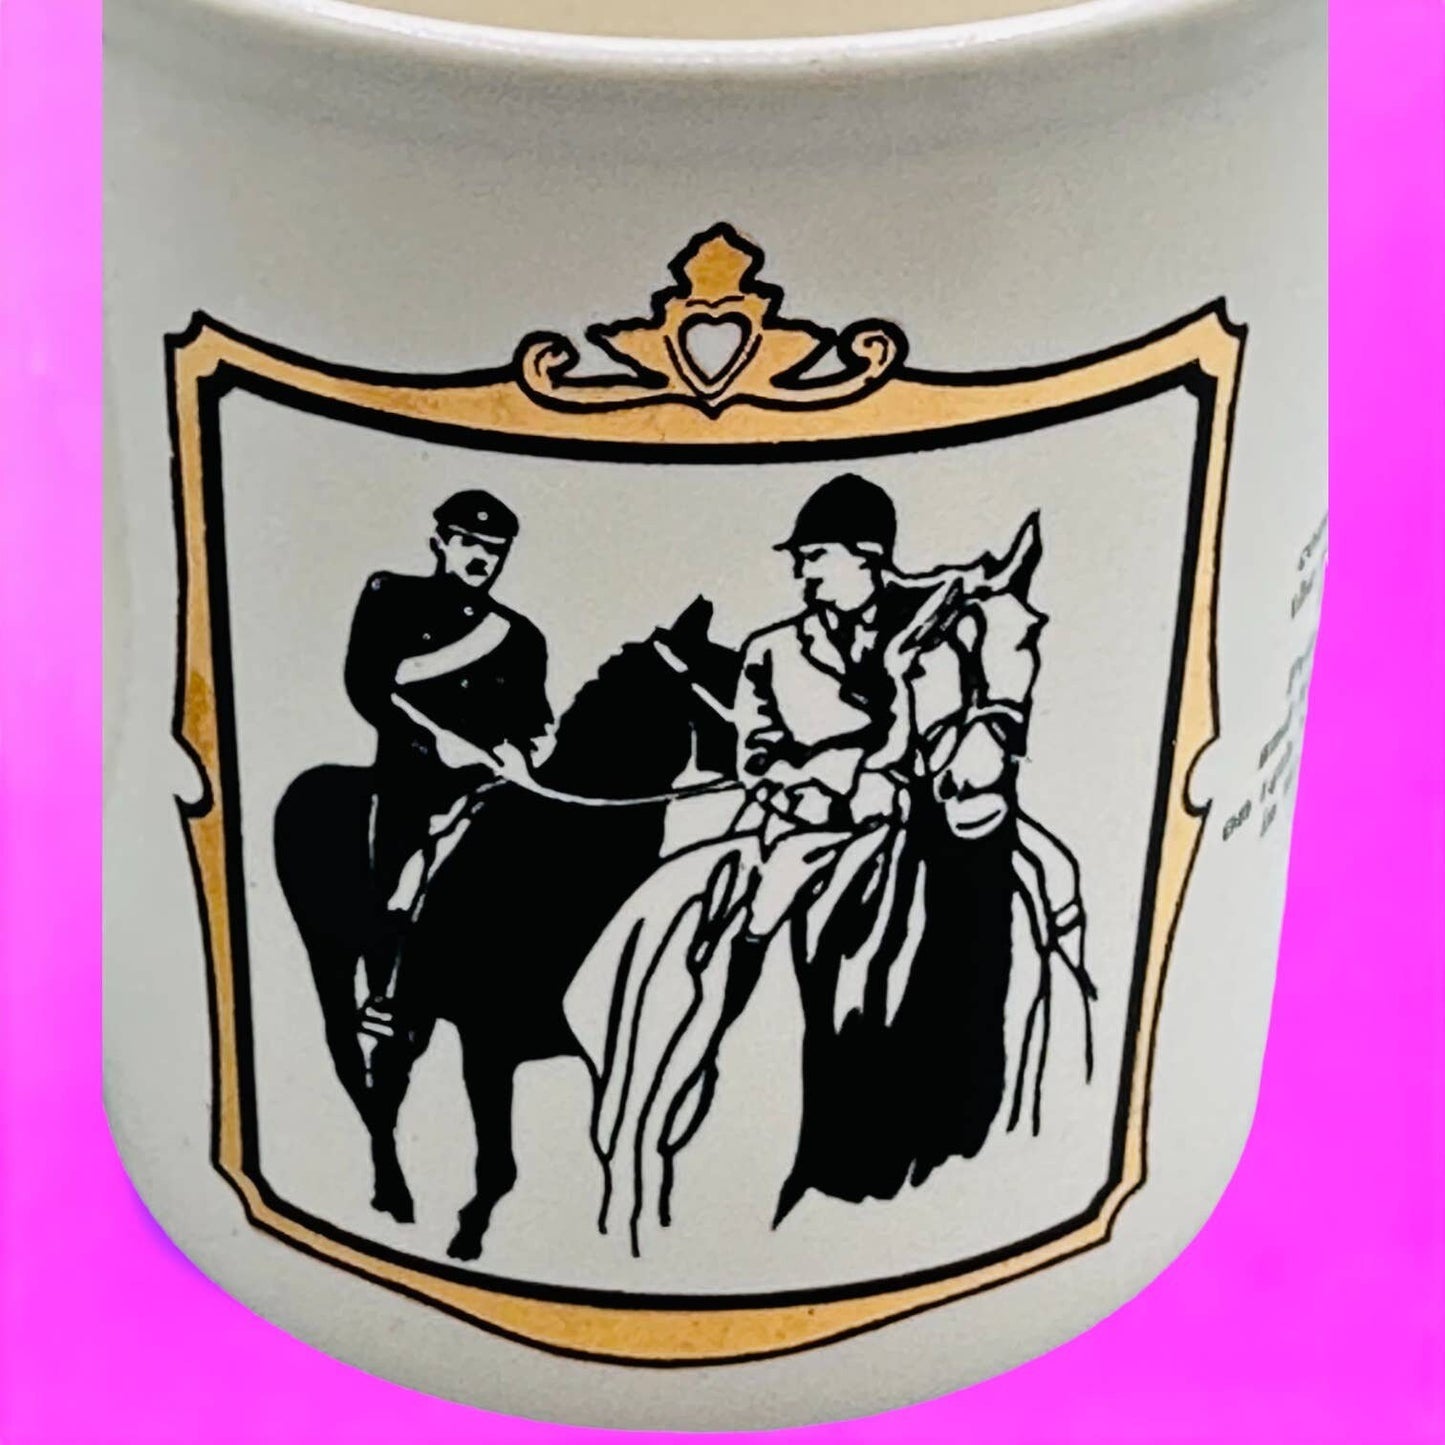 Anne & Mark 1973 Royal Wedding Mug - This mug lasted longer than their marriage.